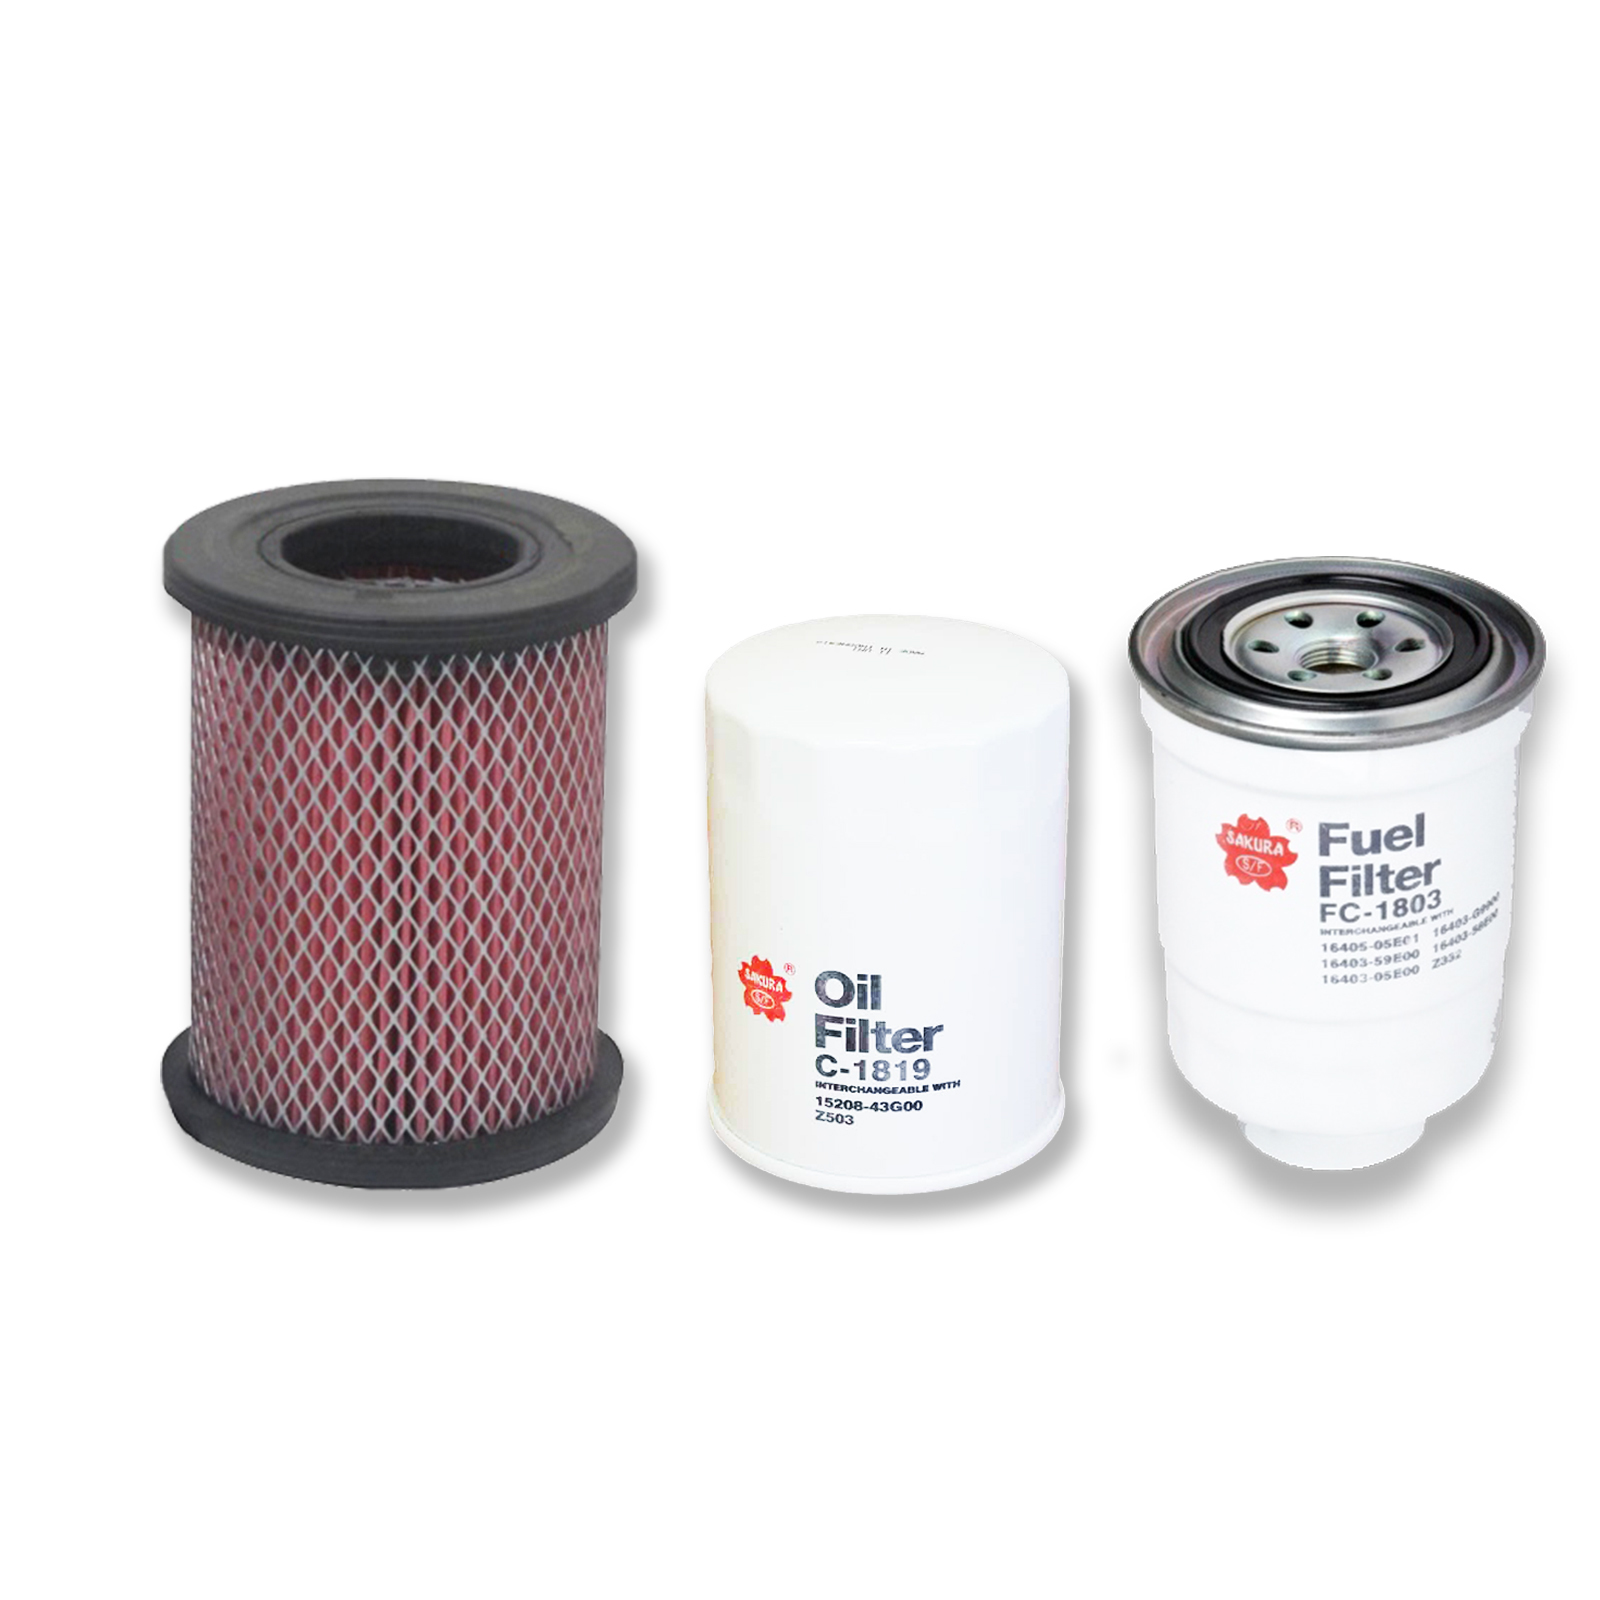 Oil Air Fuel Filter service kit for Nissan Navara D22 2.7L